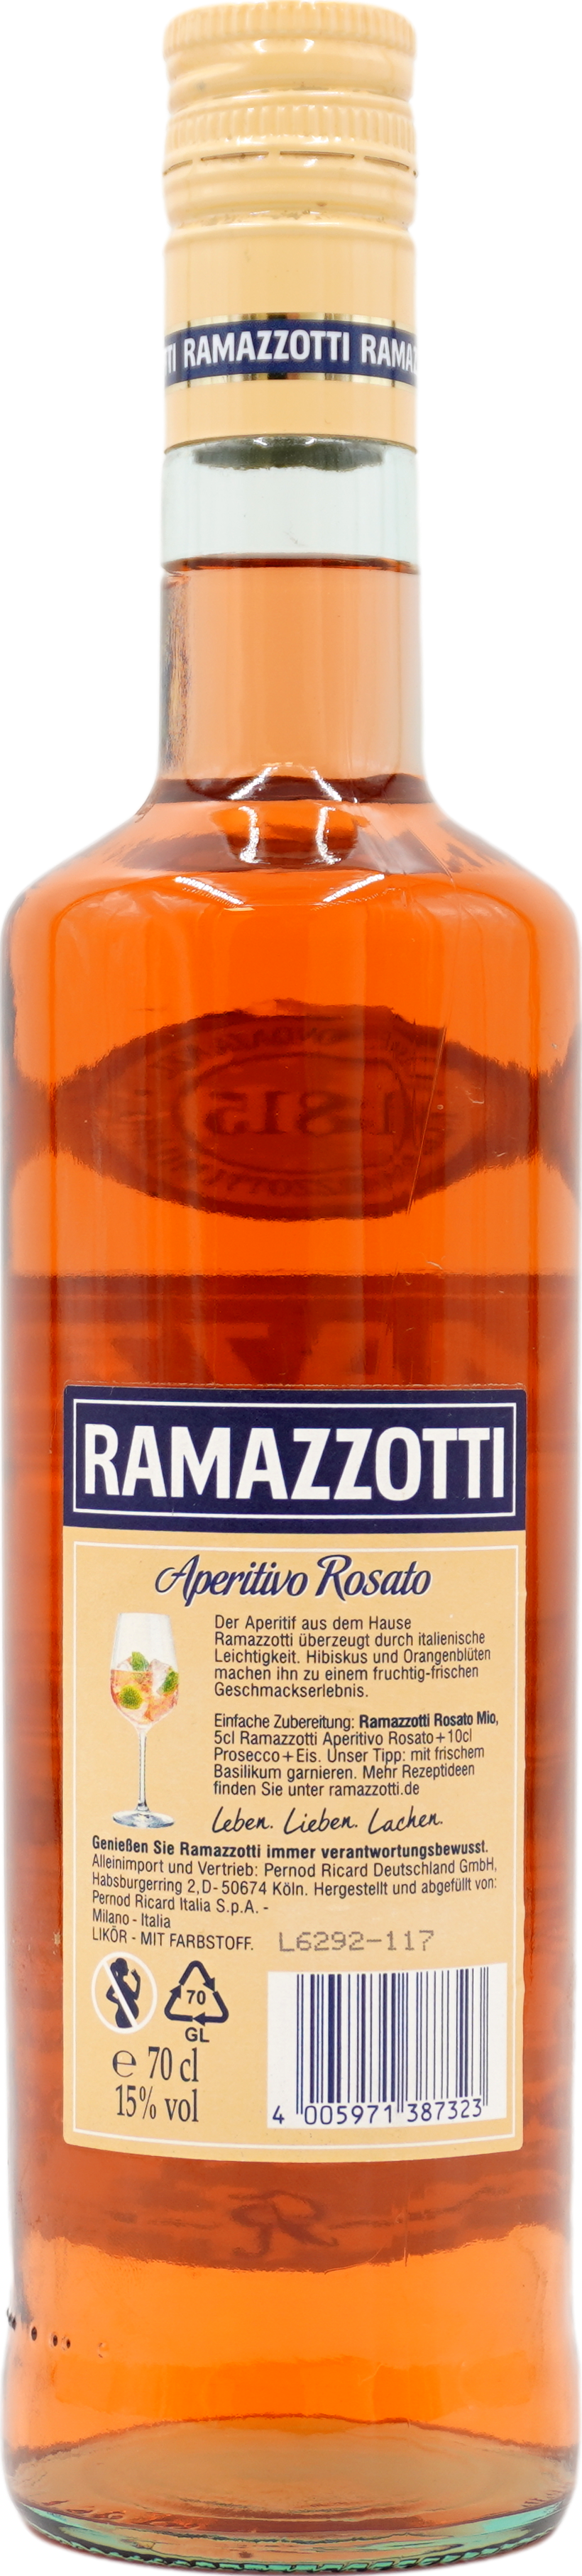 Ramazotti Aperitivo Rosato jetzt online bestellen & liefern lassen! |  KACHOURI Getränke-Service